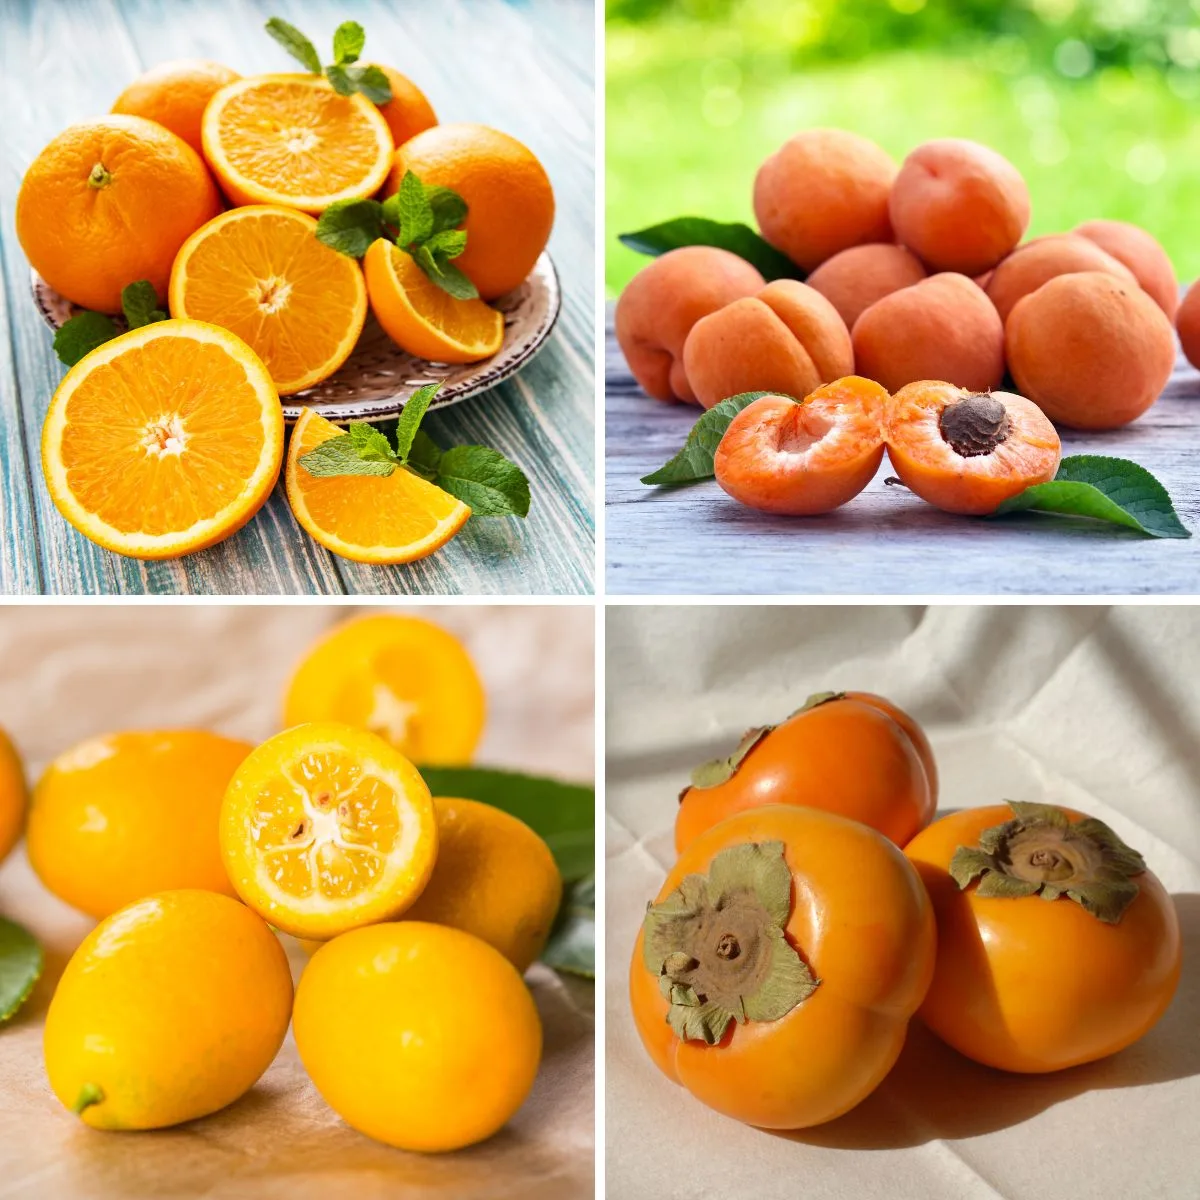 Collage of 4 orange fruits